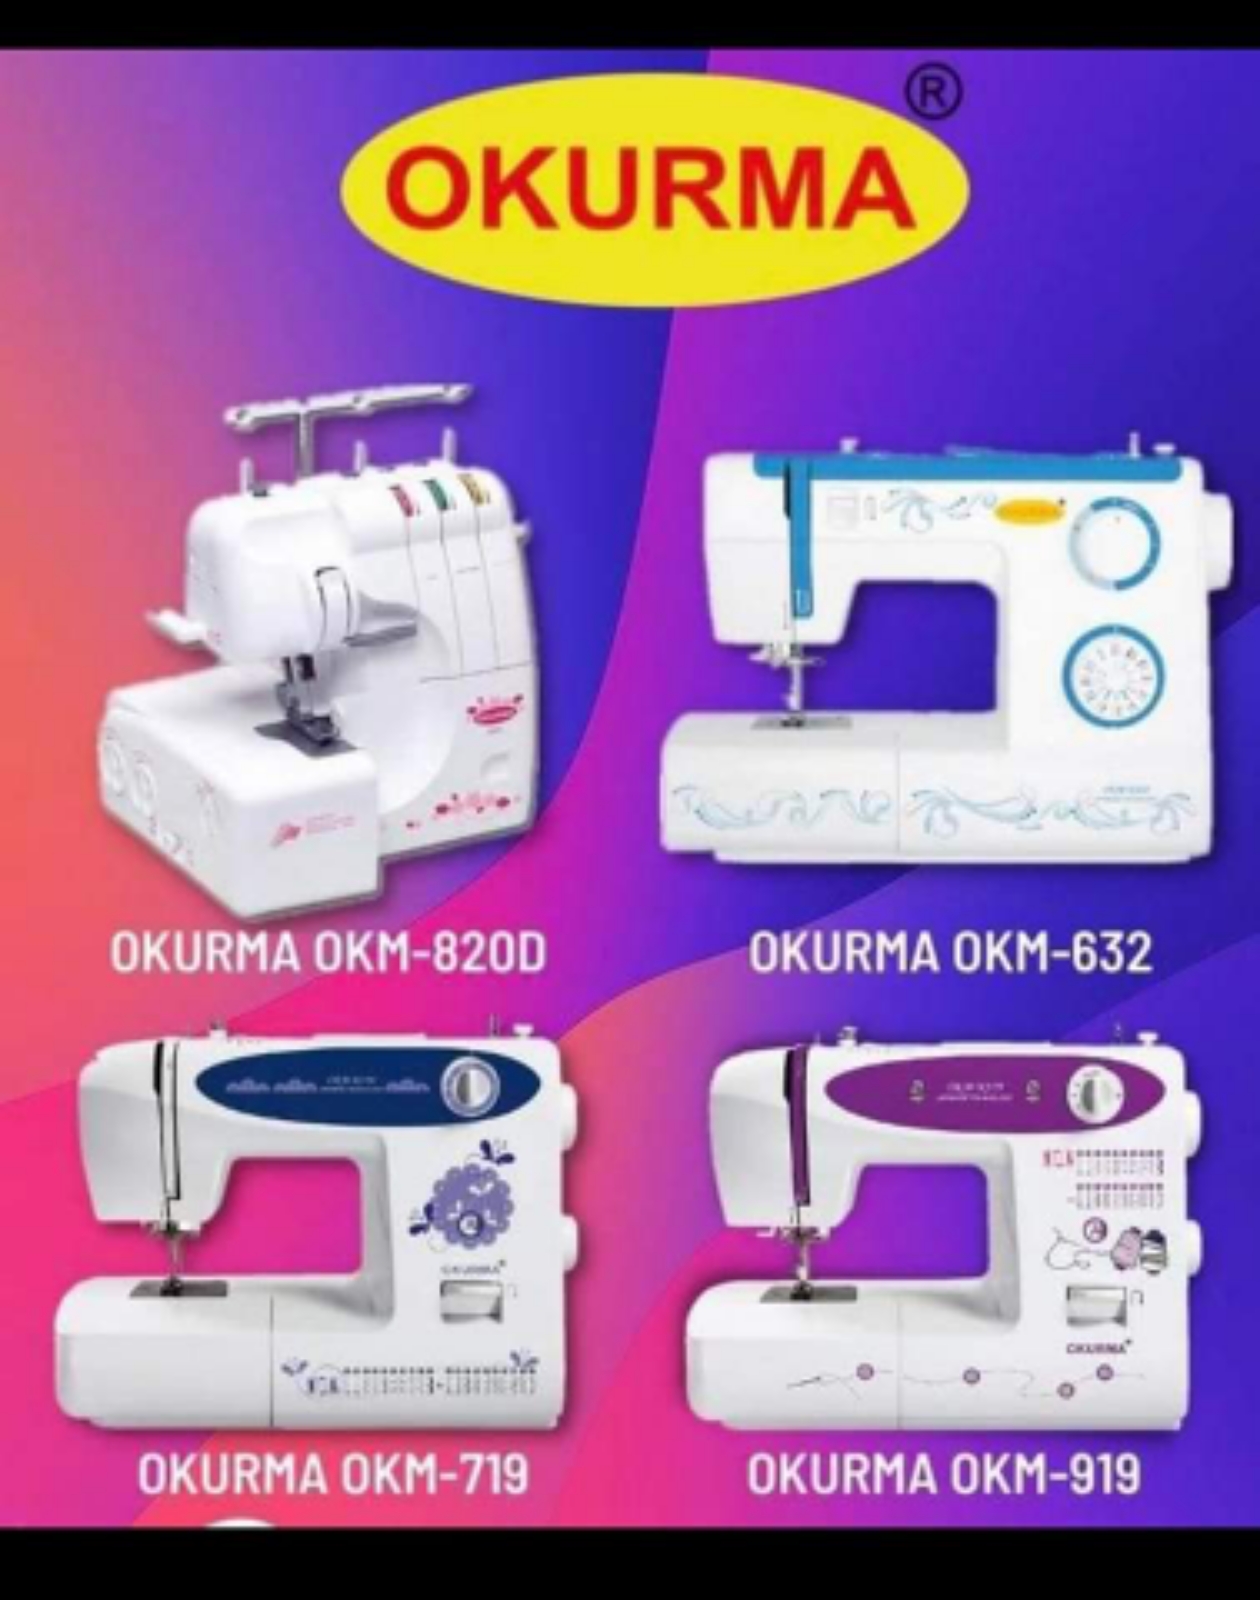 OKURMA HOME SEWING MACHINE